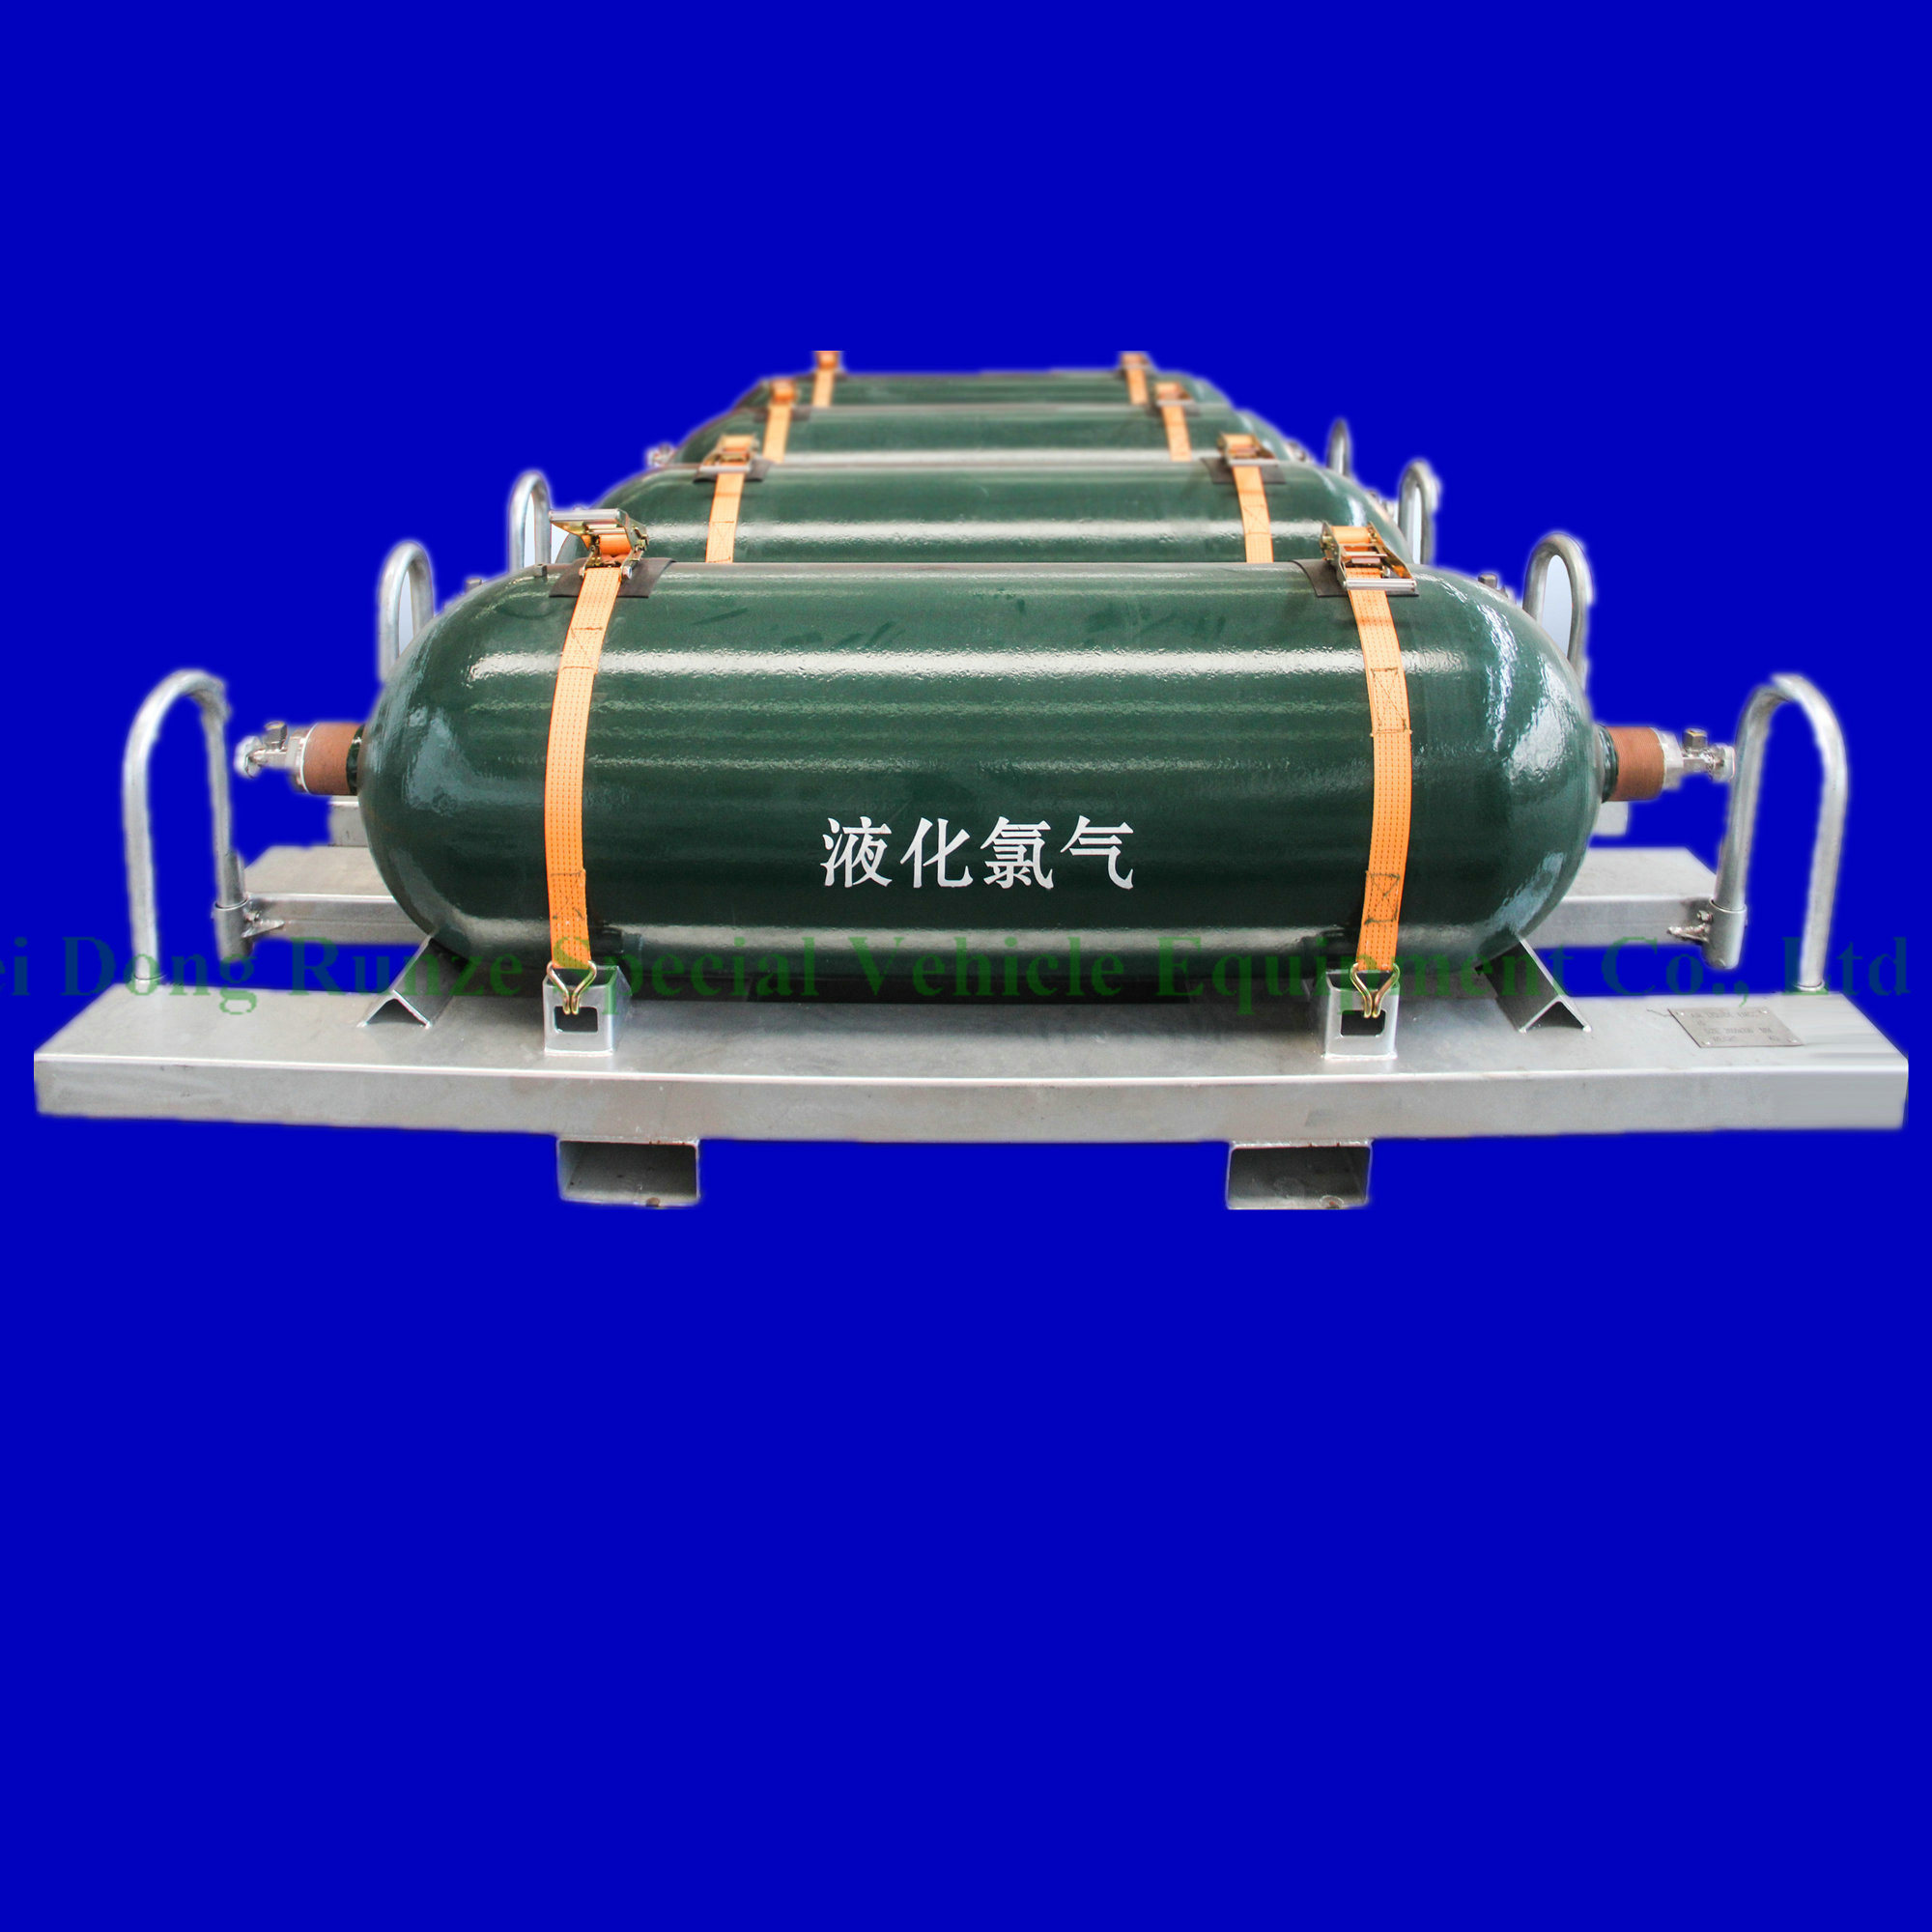 Mt1, Mt6 Cylinder Y-Ton High Purity High Pressure Gas Cylinder (N2O Nitrous Oxide Skid Mounted Gas Cylinders CHF3, N2, He, Sf6, NF3, N2O, CL2, SiH4)